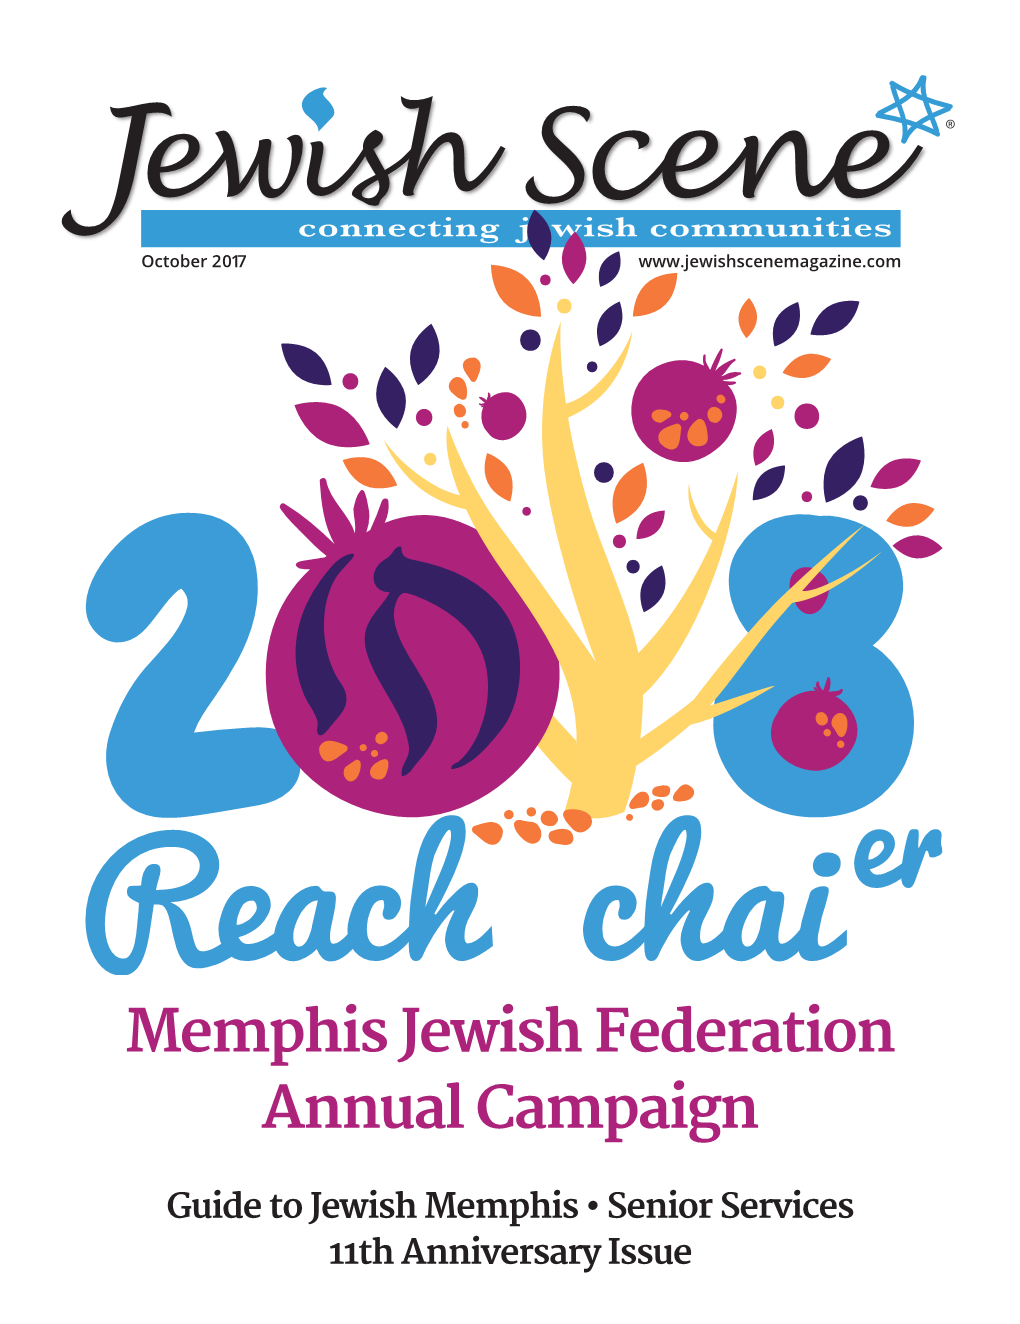 Memphis Jewish Federation Annual Campaign